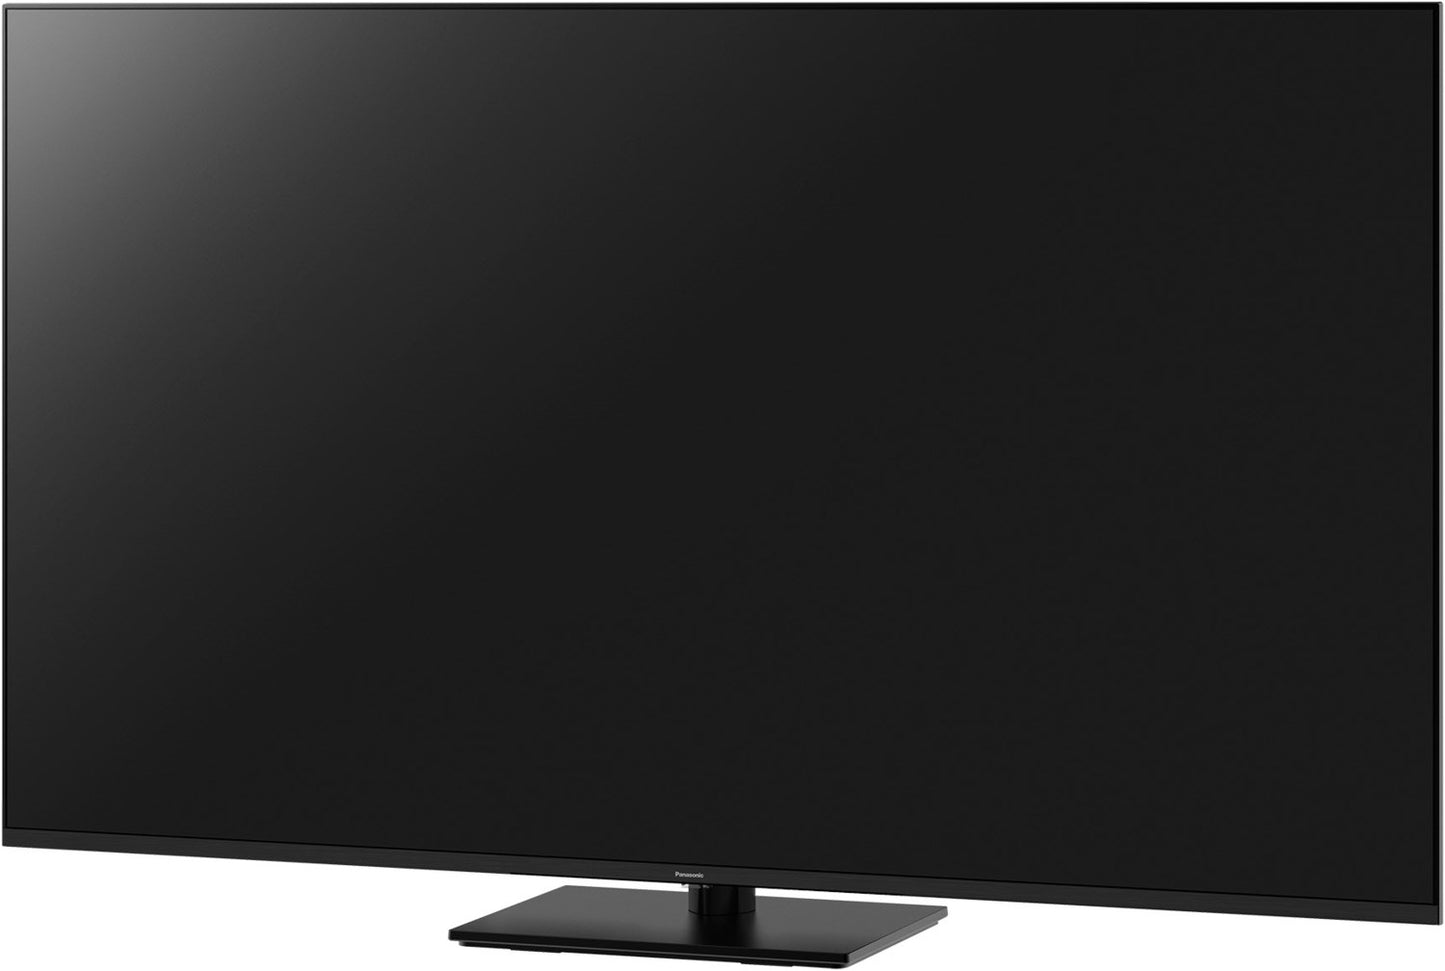 Mietkauf Panasonic LCD-TV 65Zoll - Akif Rana GmbH